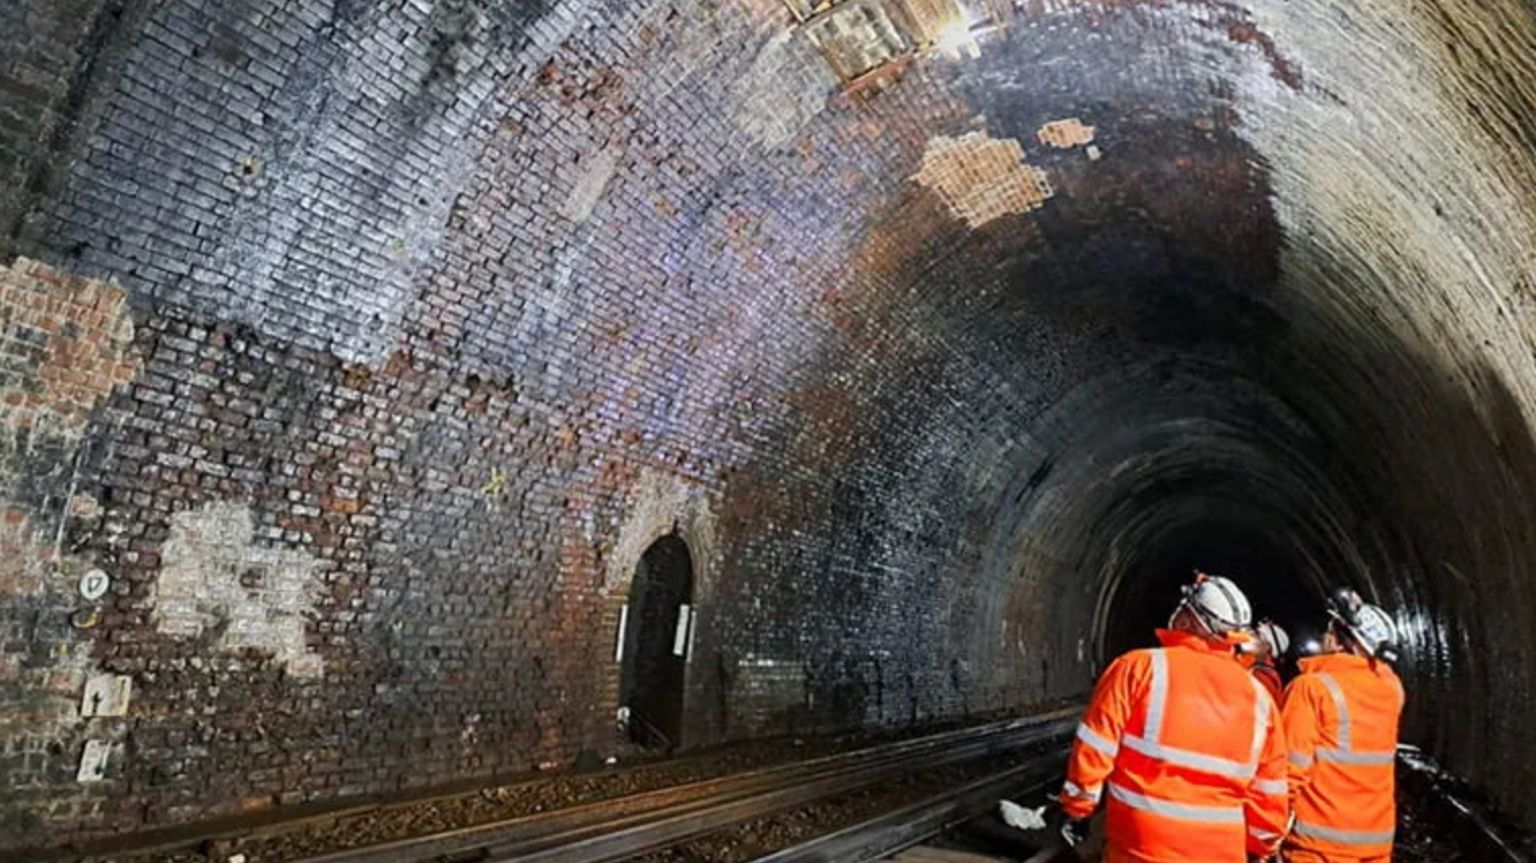 Blackheath tunnel inspected by three men in orange jacket